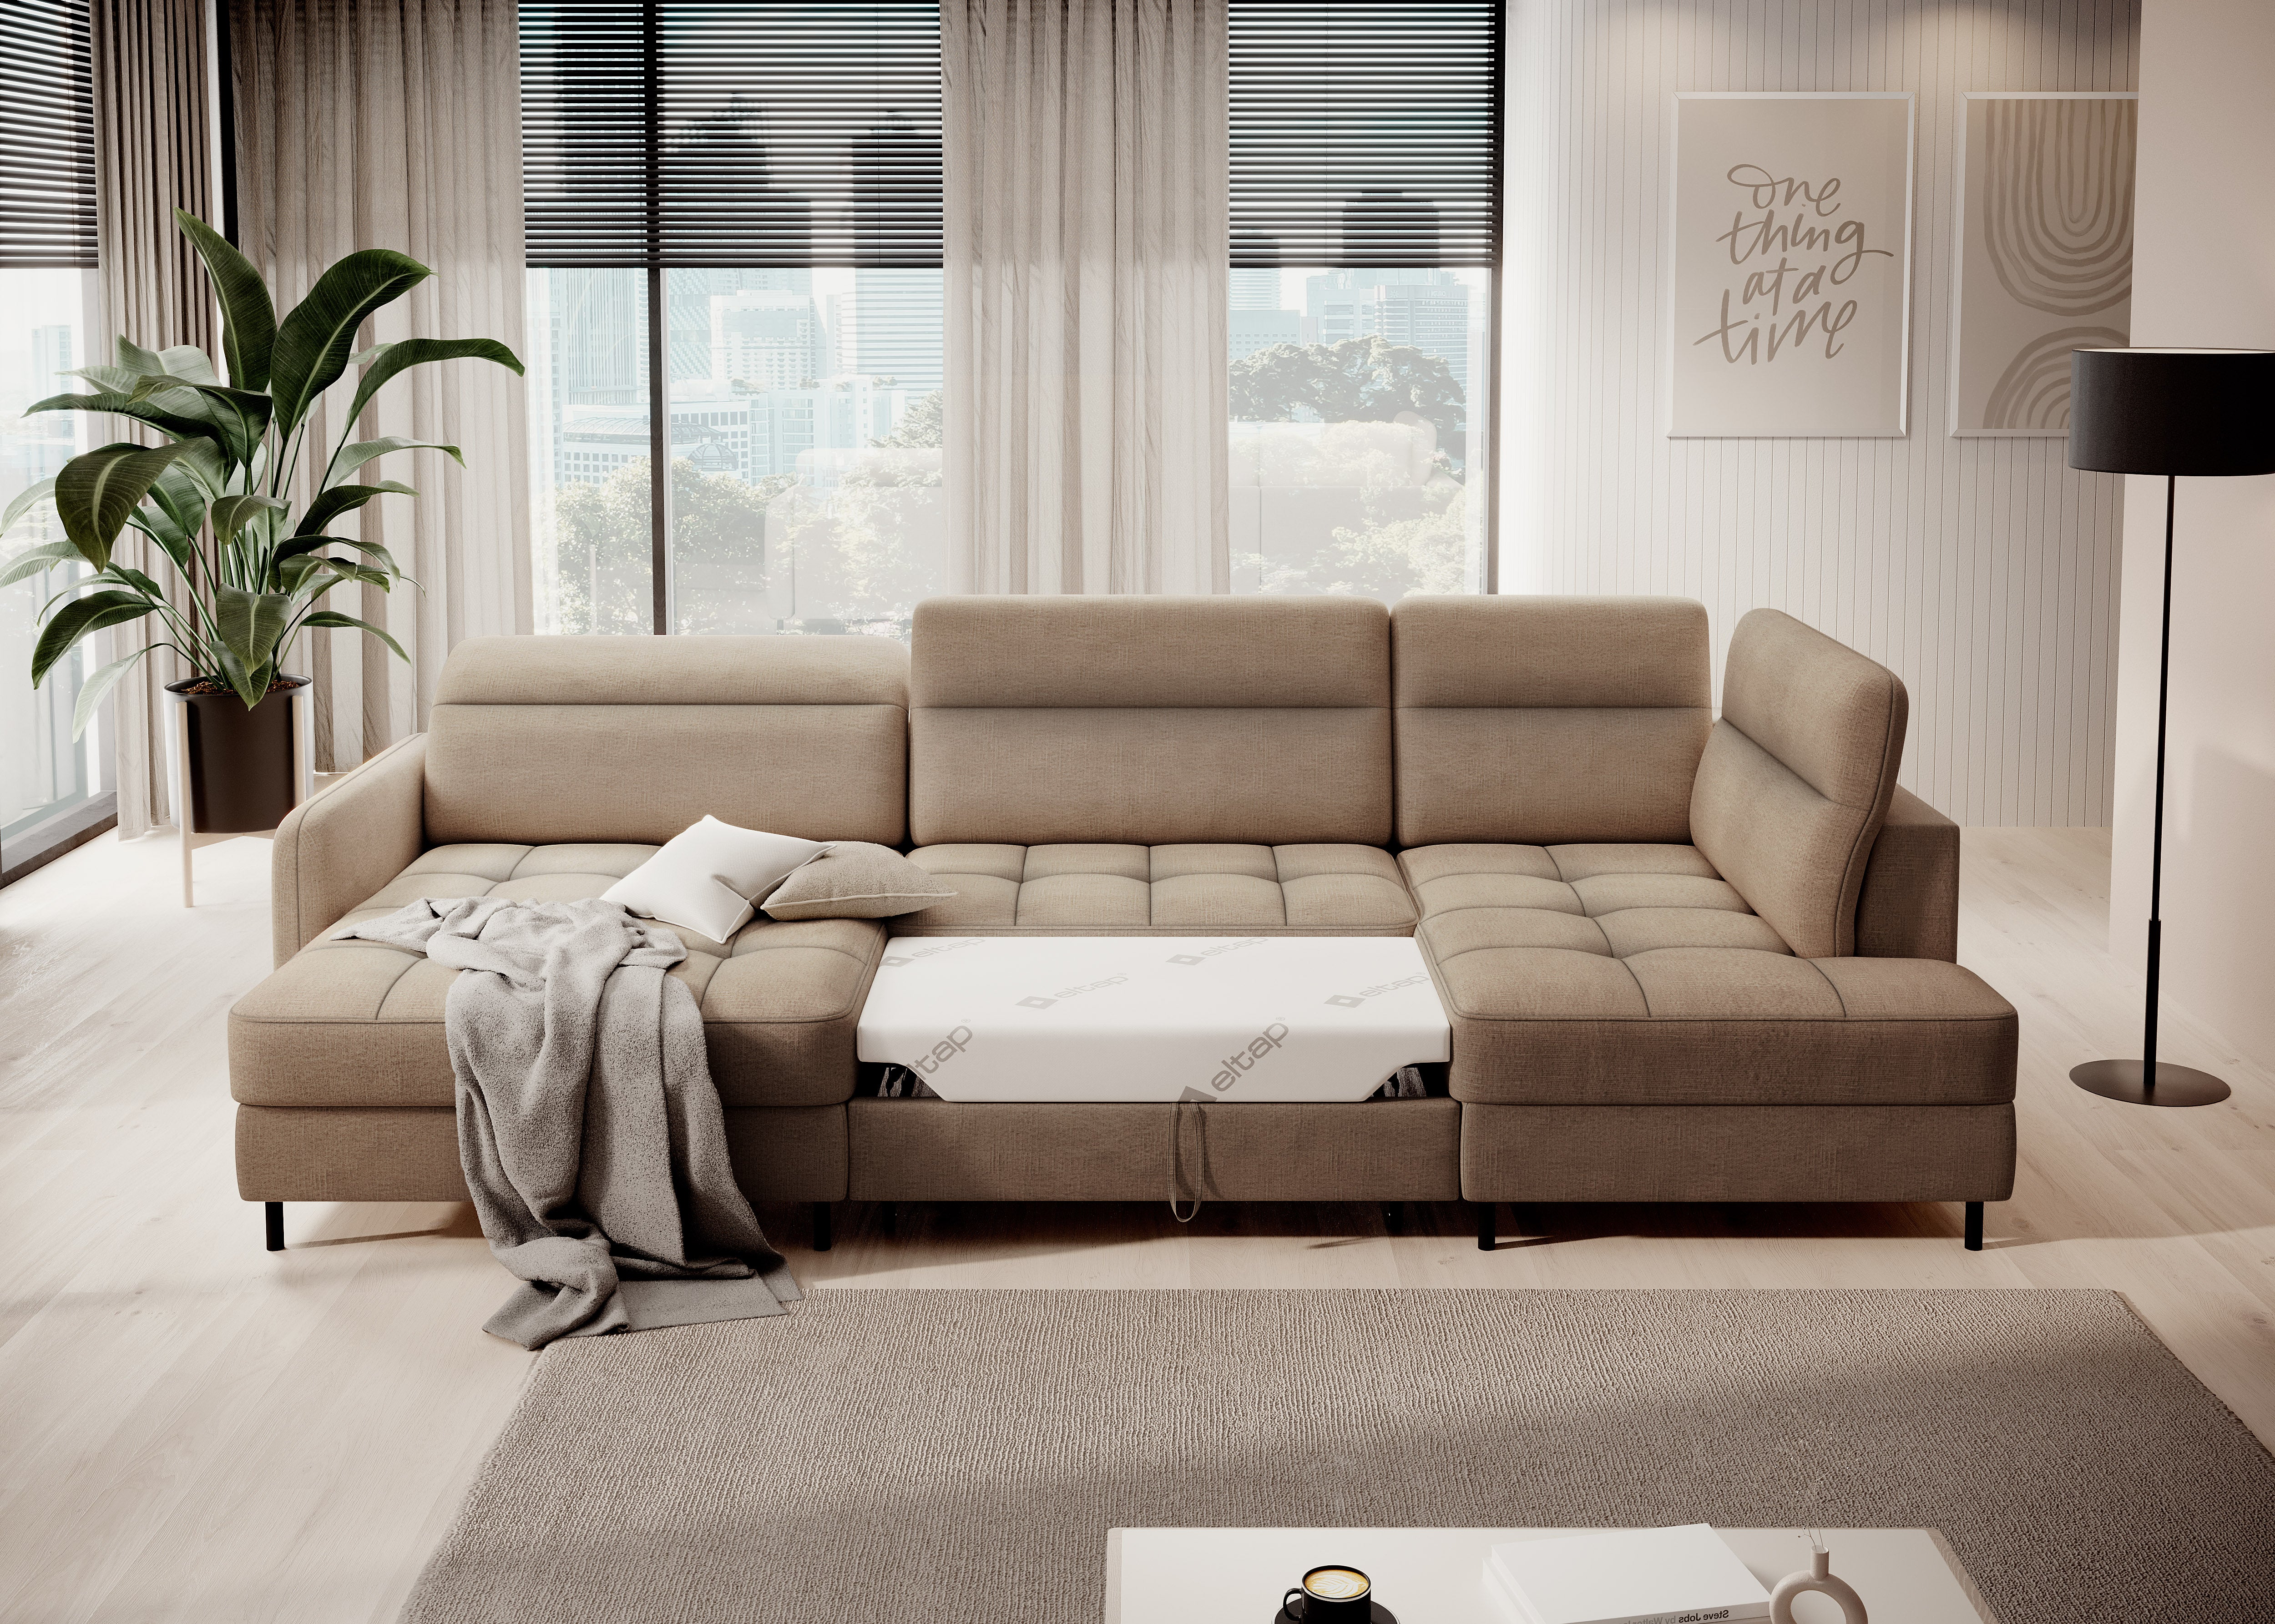 Sofá en U moderno (2 chaiselongs) con cama y arcón – BERRTO